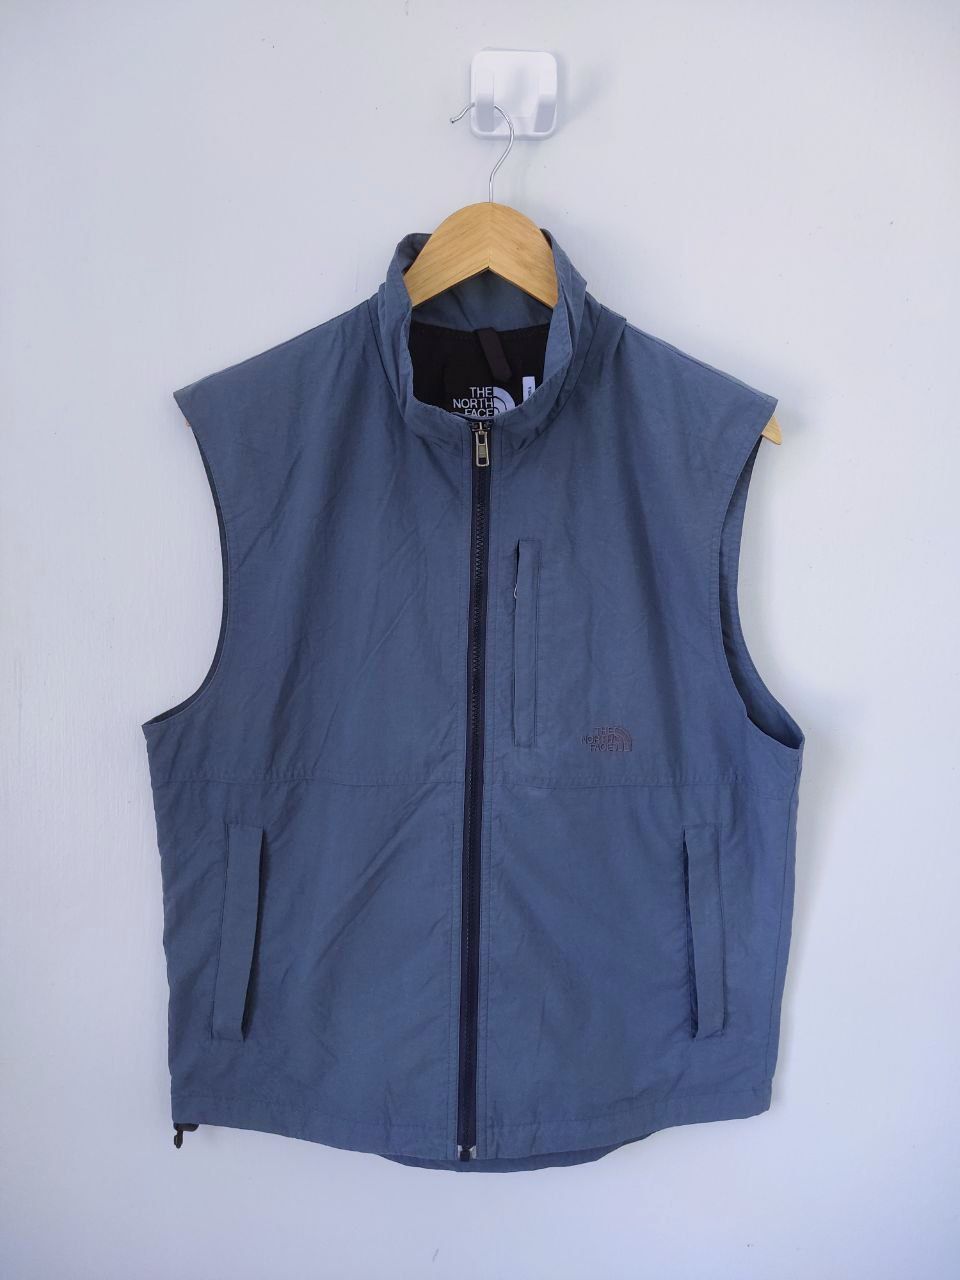 The North Face Nylon Vest Jacket - 5